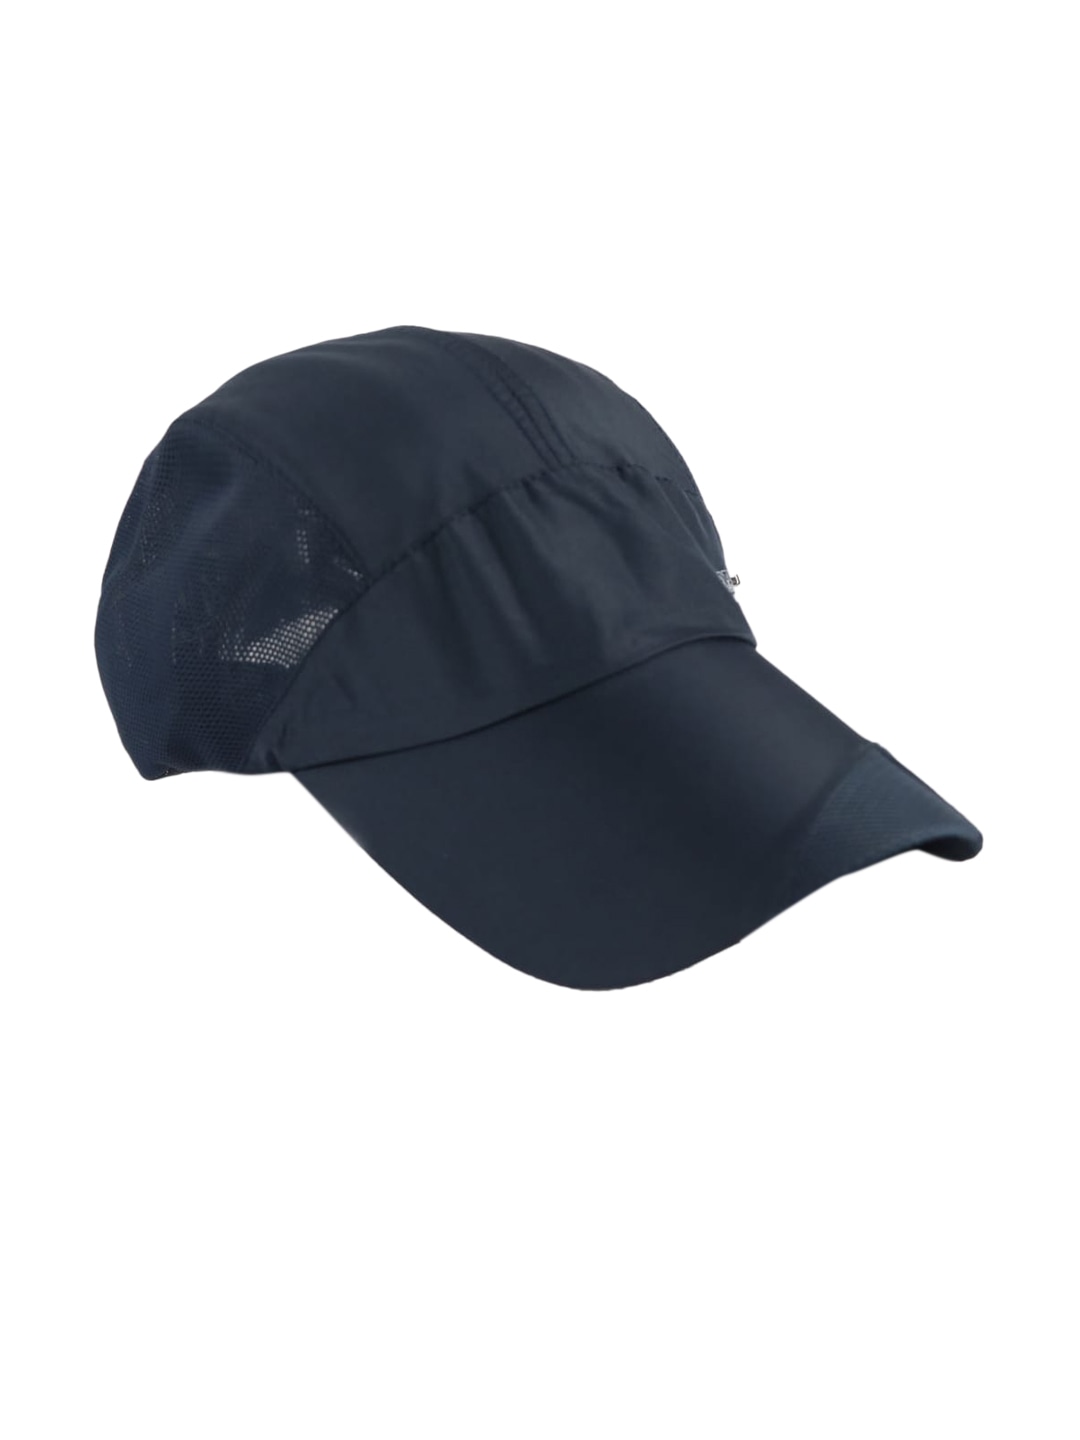 Accessories Caps | iSWEVEN Unisex Blue Self Design Snapback Cap - LZ53617